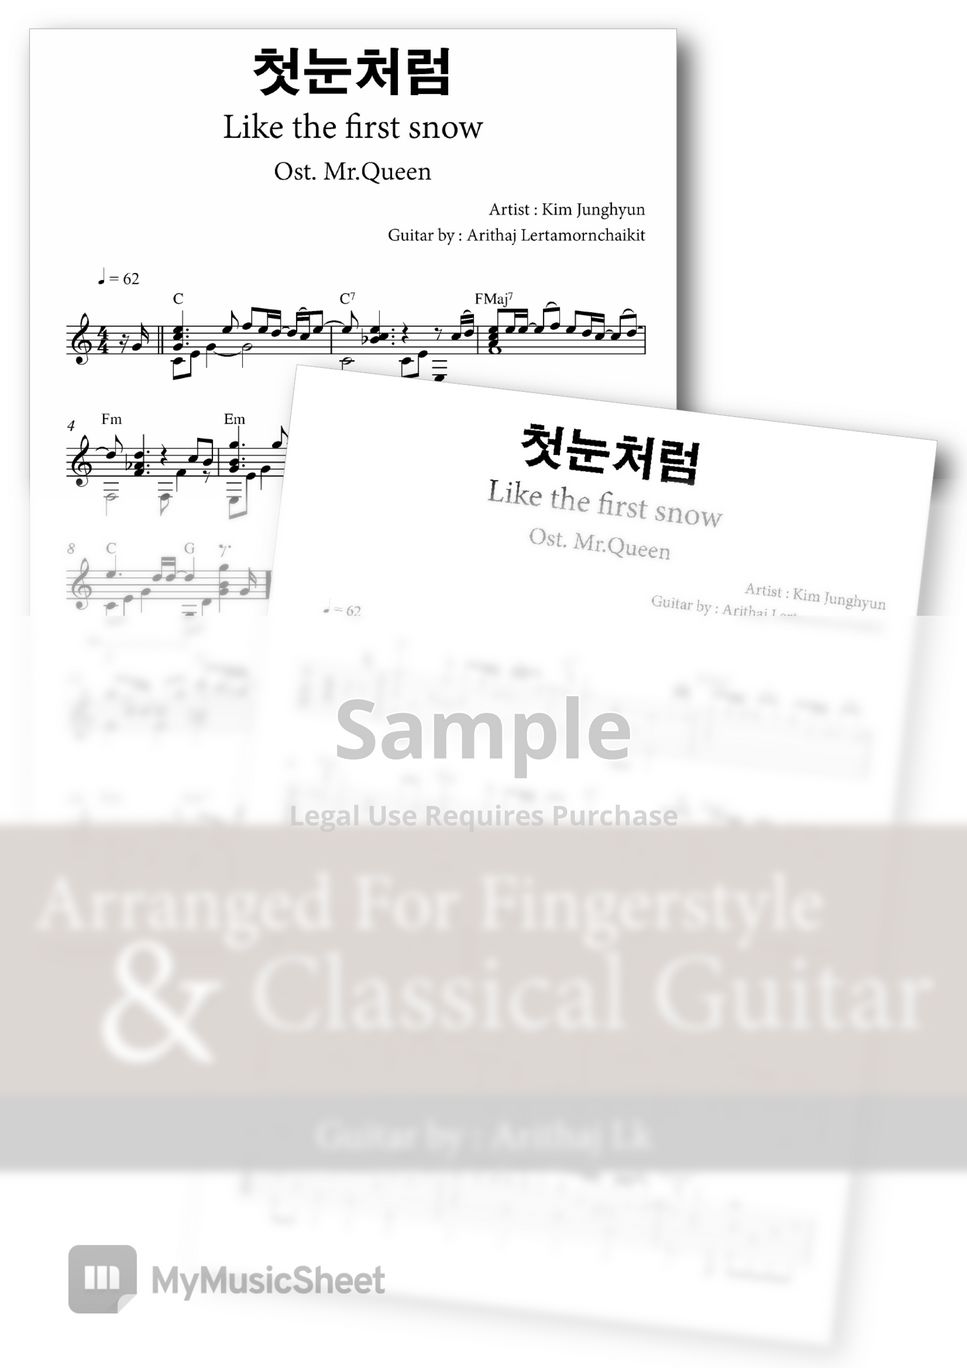 Kim Junghyun - Like the first snow (Ost.Mr.Queen) - Fingerstyle Guitar (Korean Drama) by Arithaj Lk